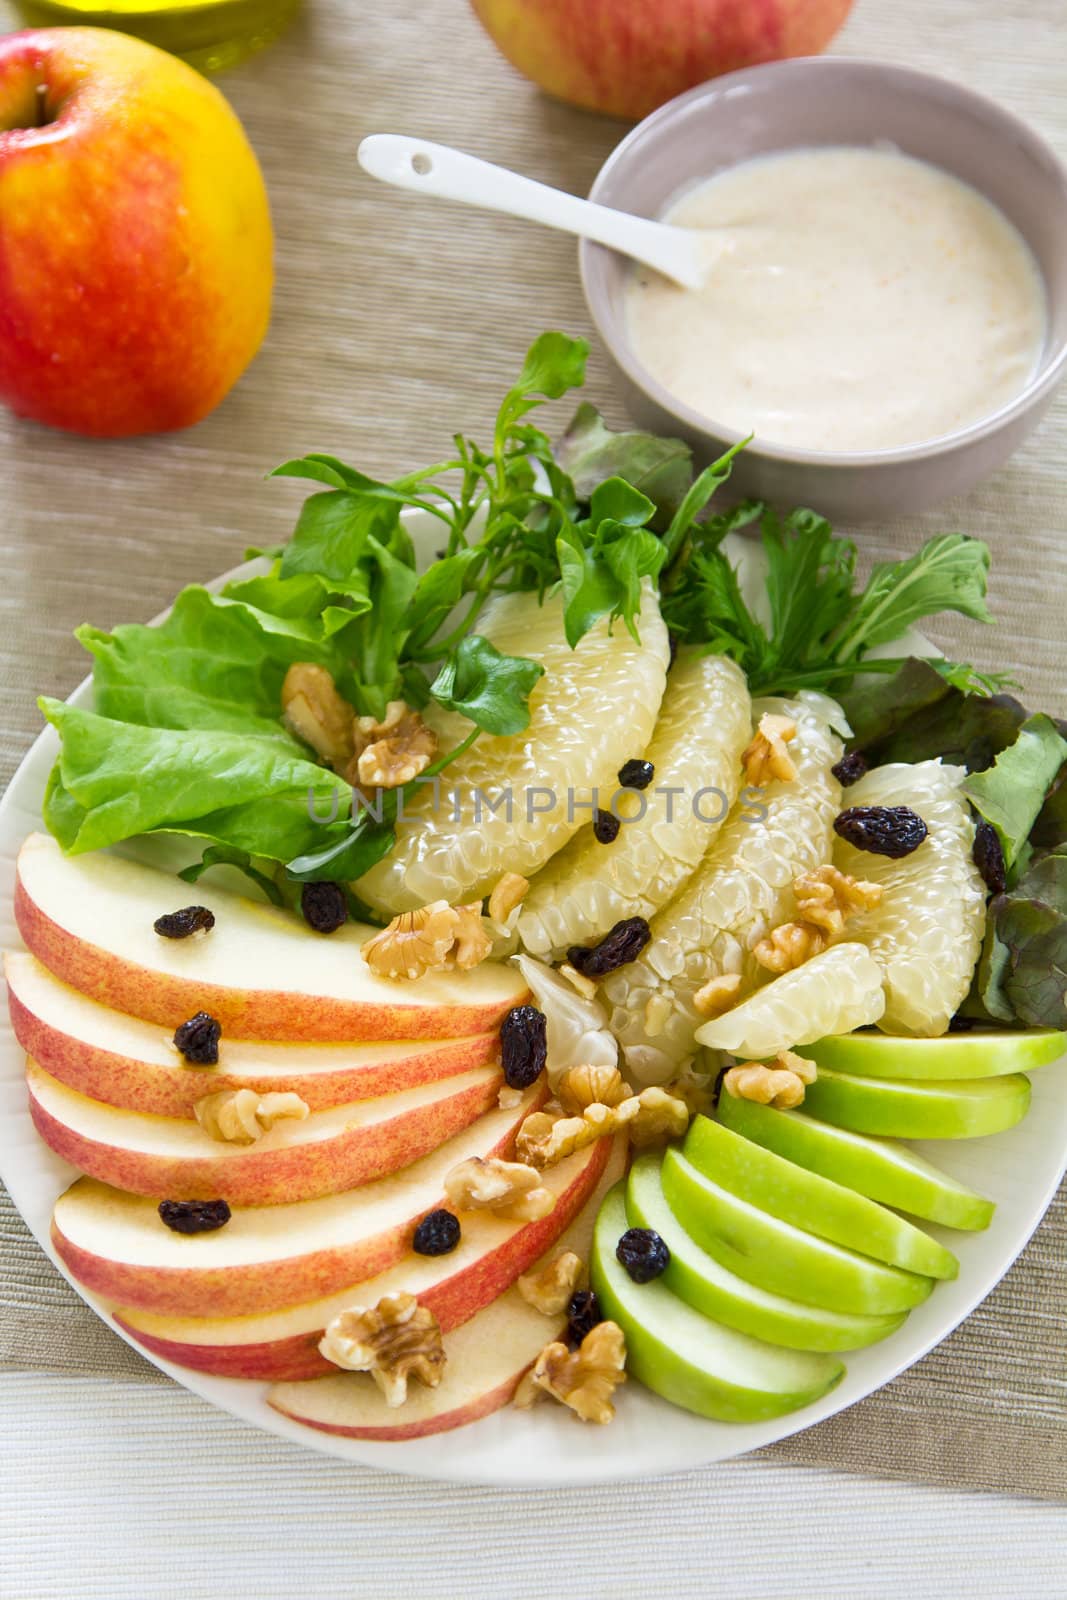 Apple with Grapefruit  and walnut salad by yogurt dressing